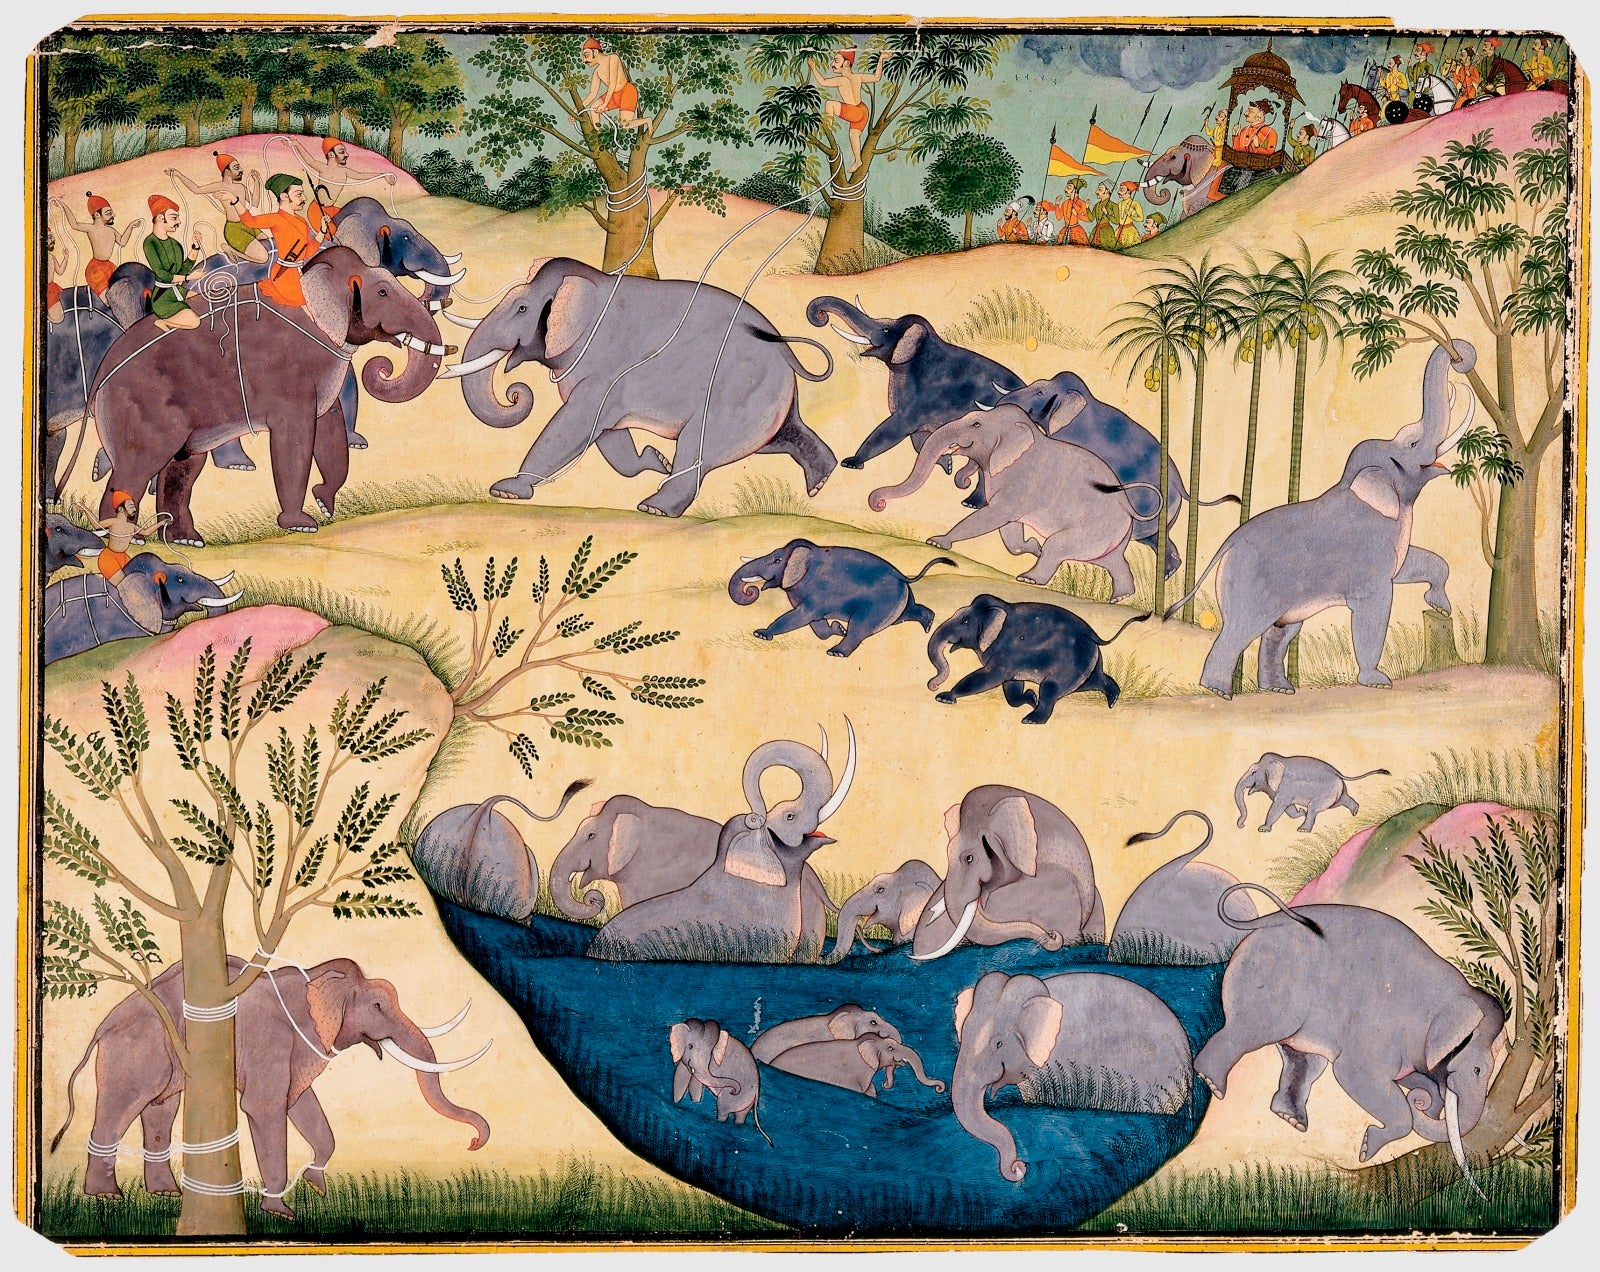 Artifact Puzzles - Bikaner Elephants Wooden Jigsaw Puzzle